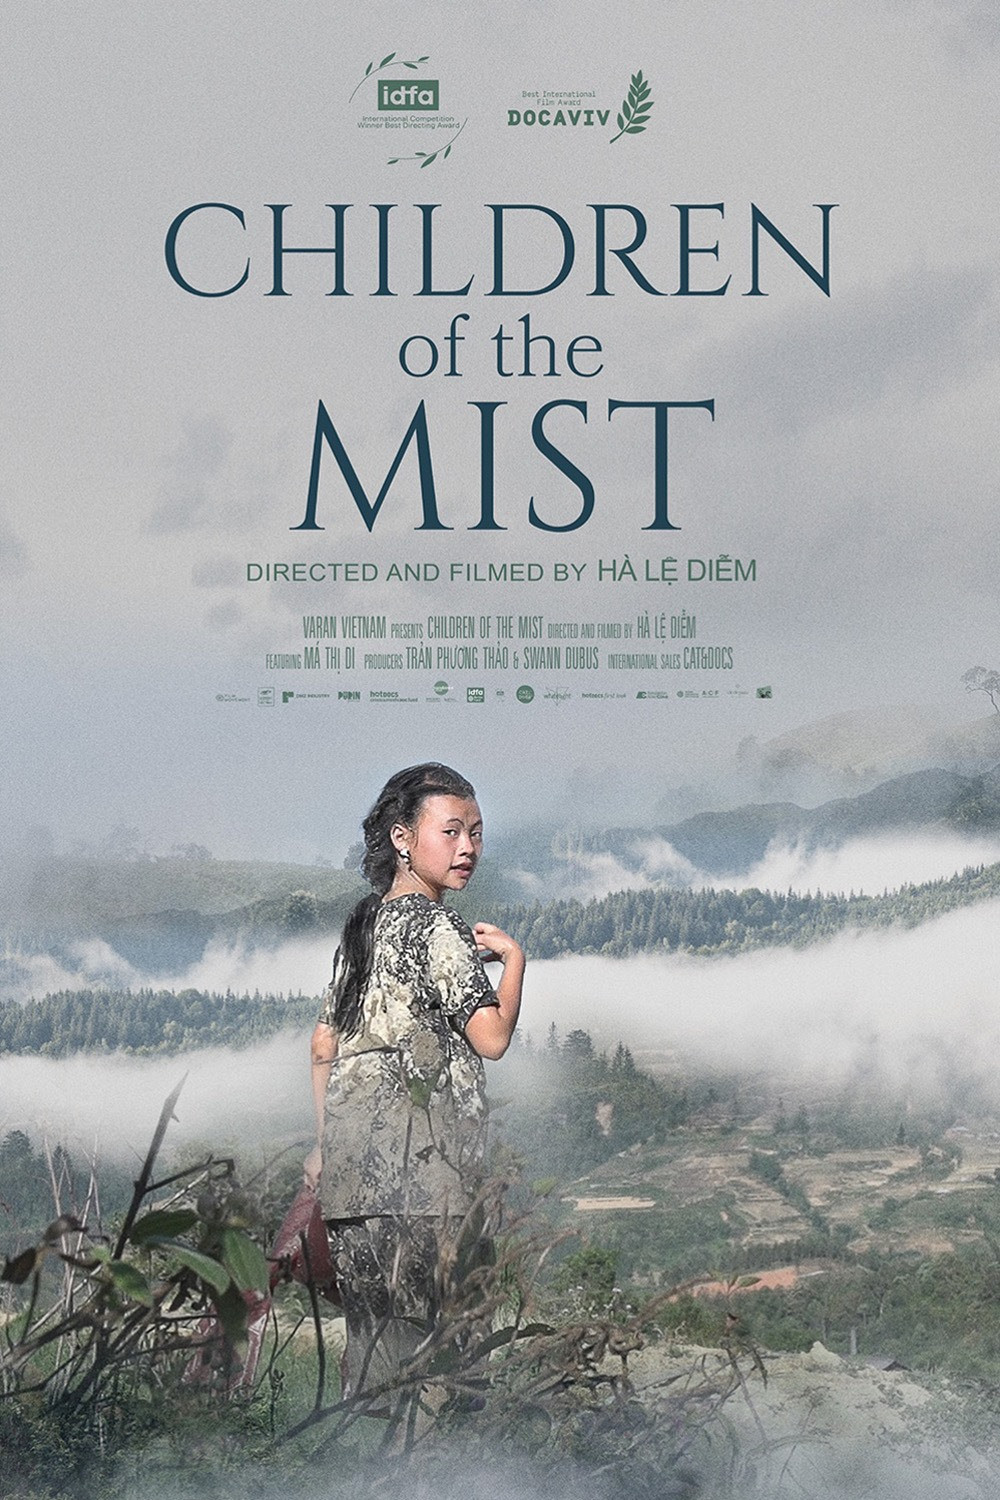 Poster phim “Children of the Mist“. Ảnh: Varan Vietnam